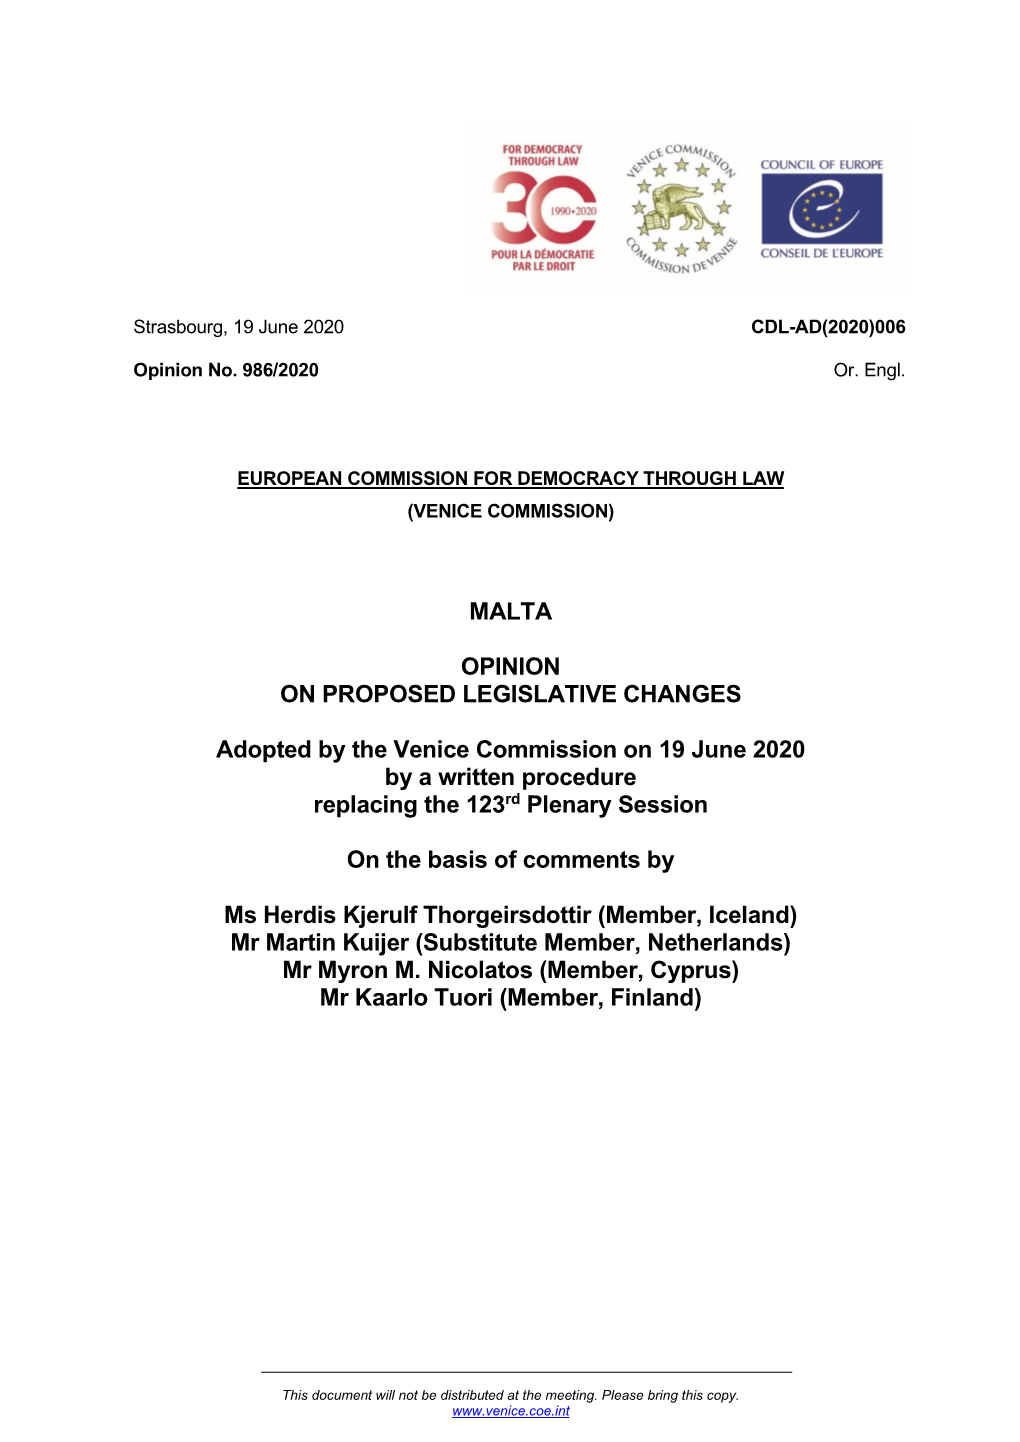 Malta Opinion on Proposed Legislative